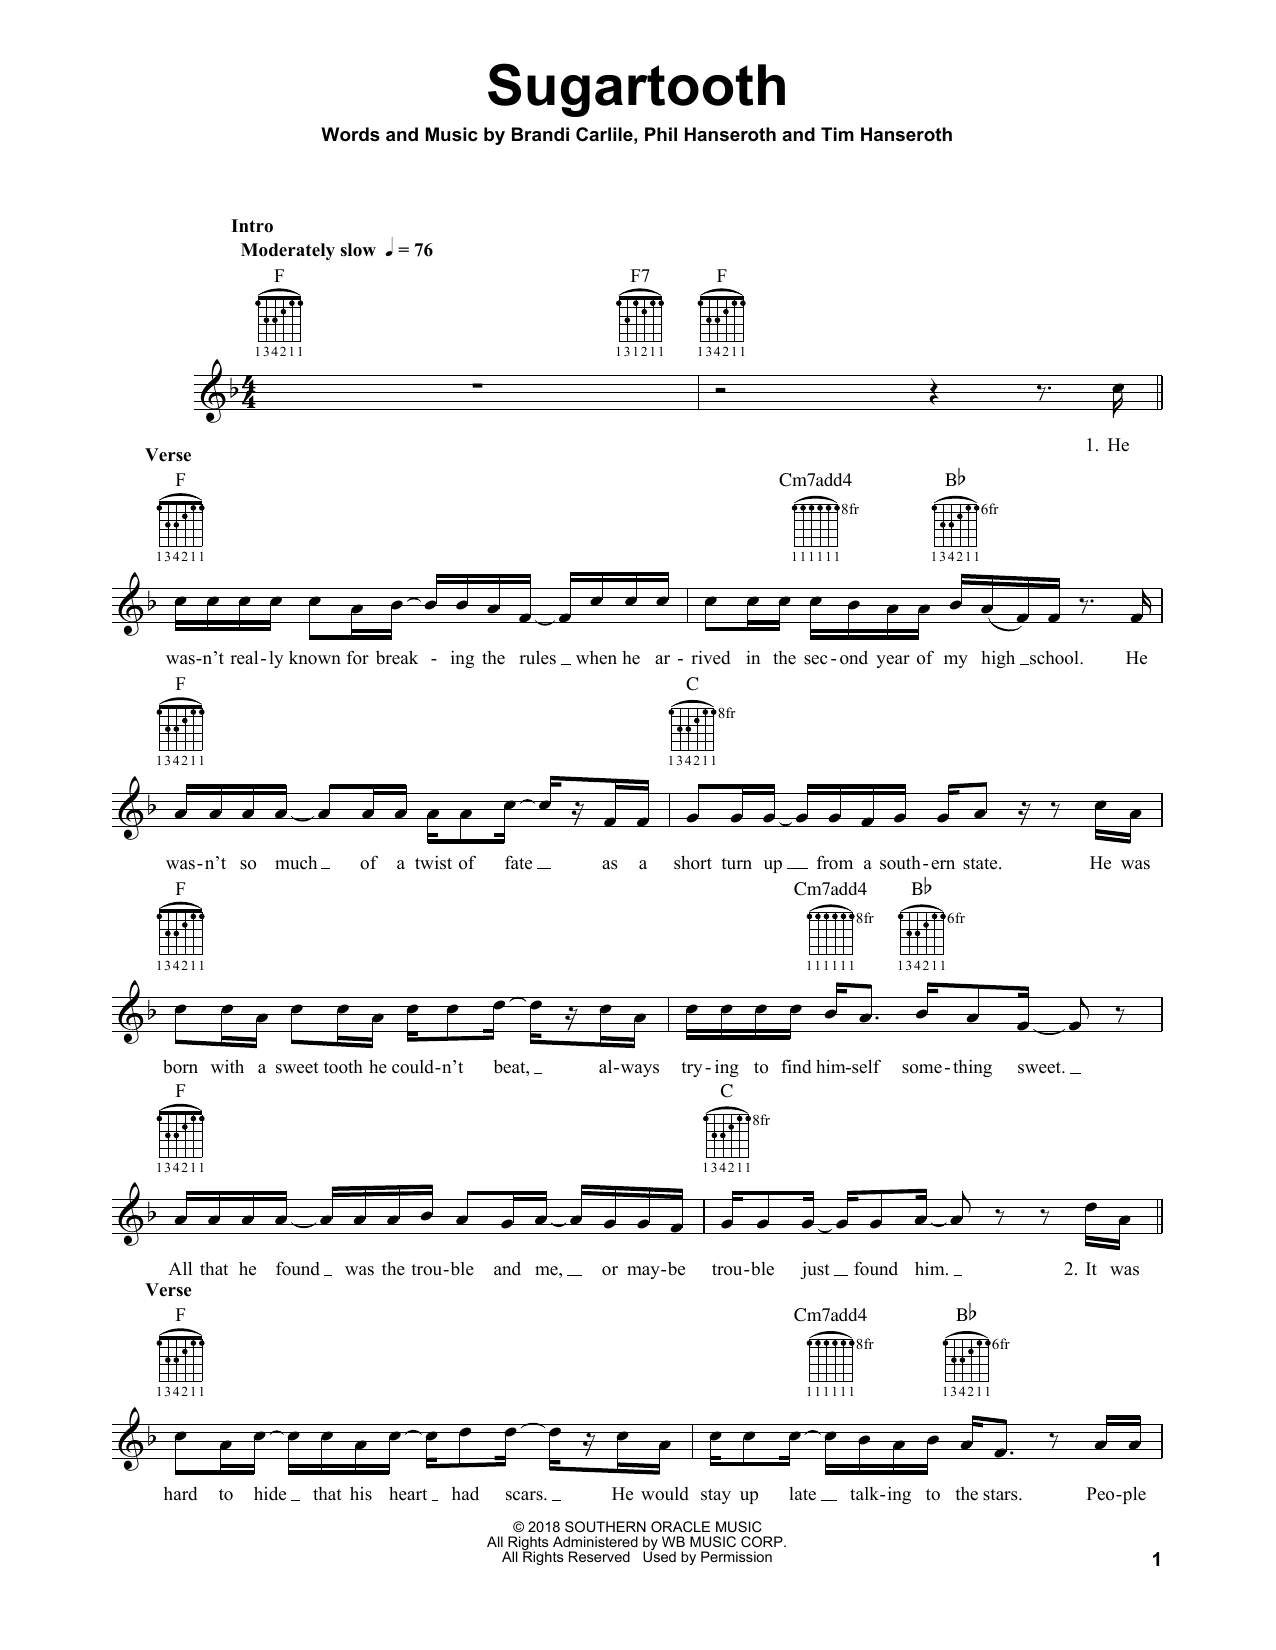 Brandi Carlile Sugartooth Sheet Music Notes & Chords for Guitar Tab - Download or Print PDF